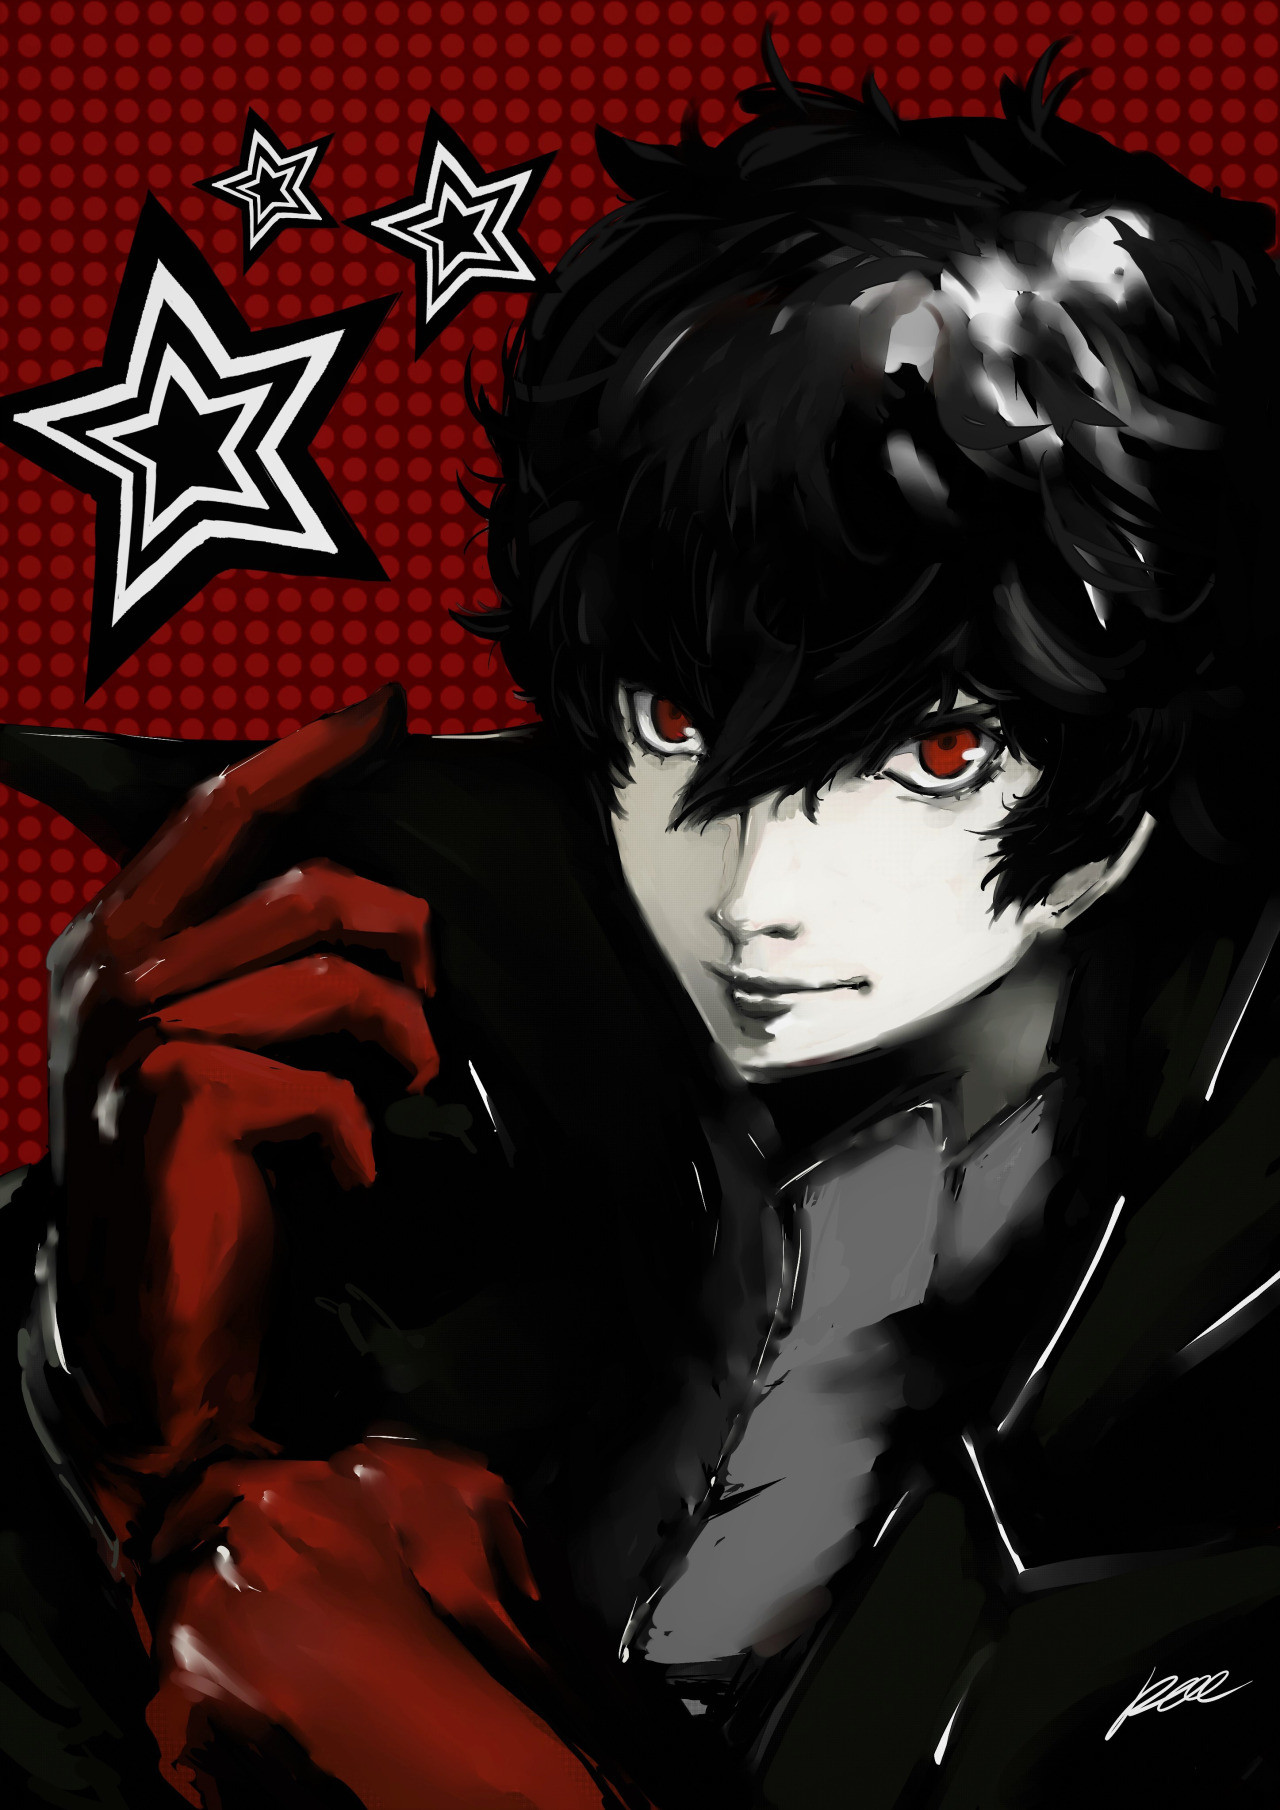 ArtStation - Persona 5 protagonist(Joker) illustration